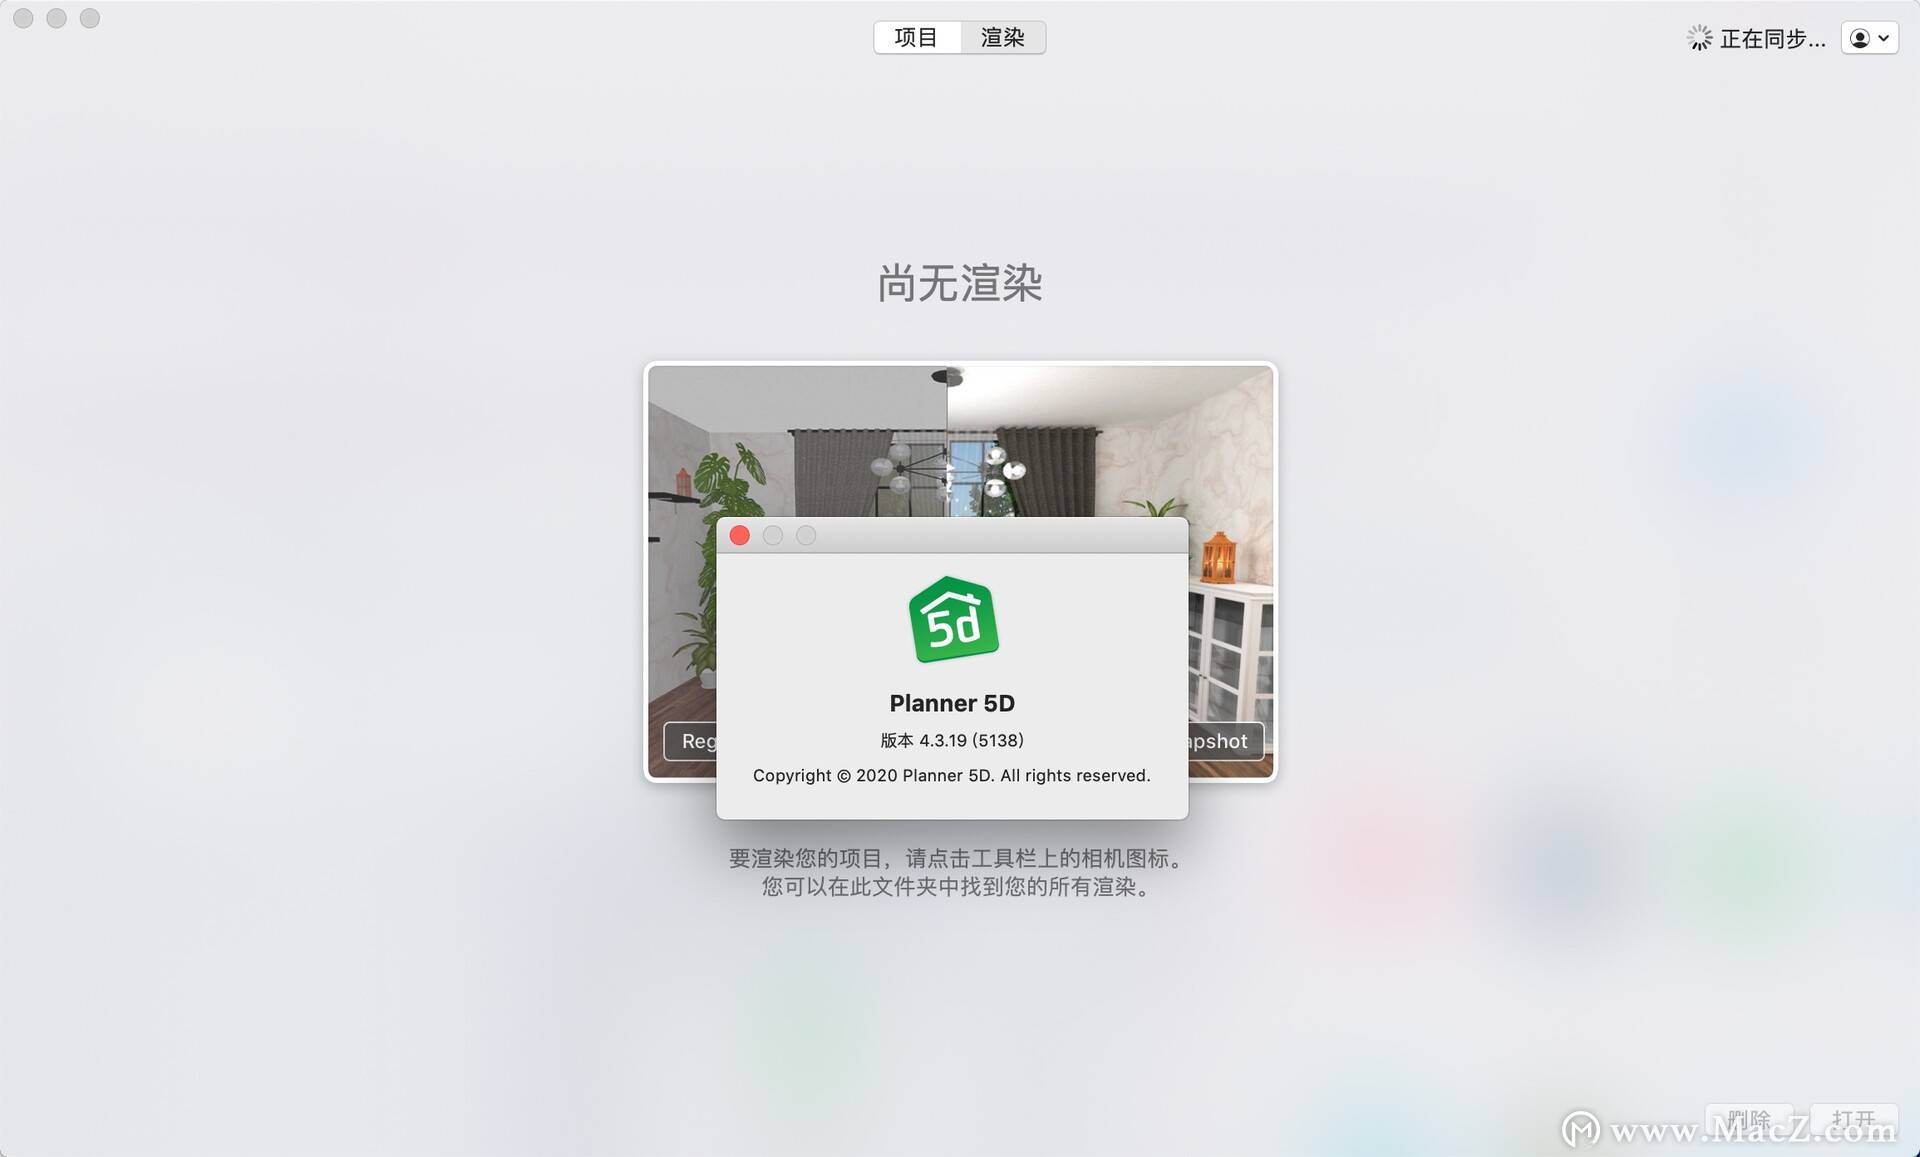 “leyu乐鱼官网”
Planner 5d for mac室